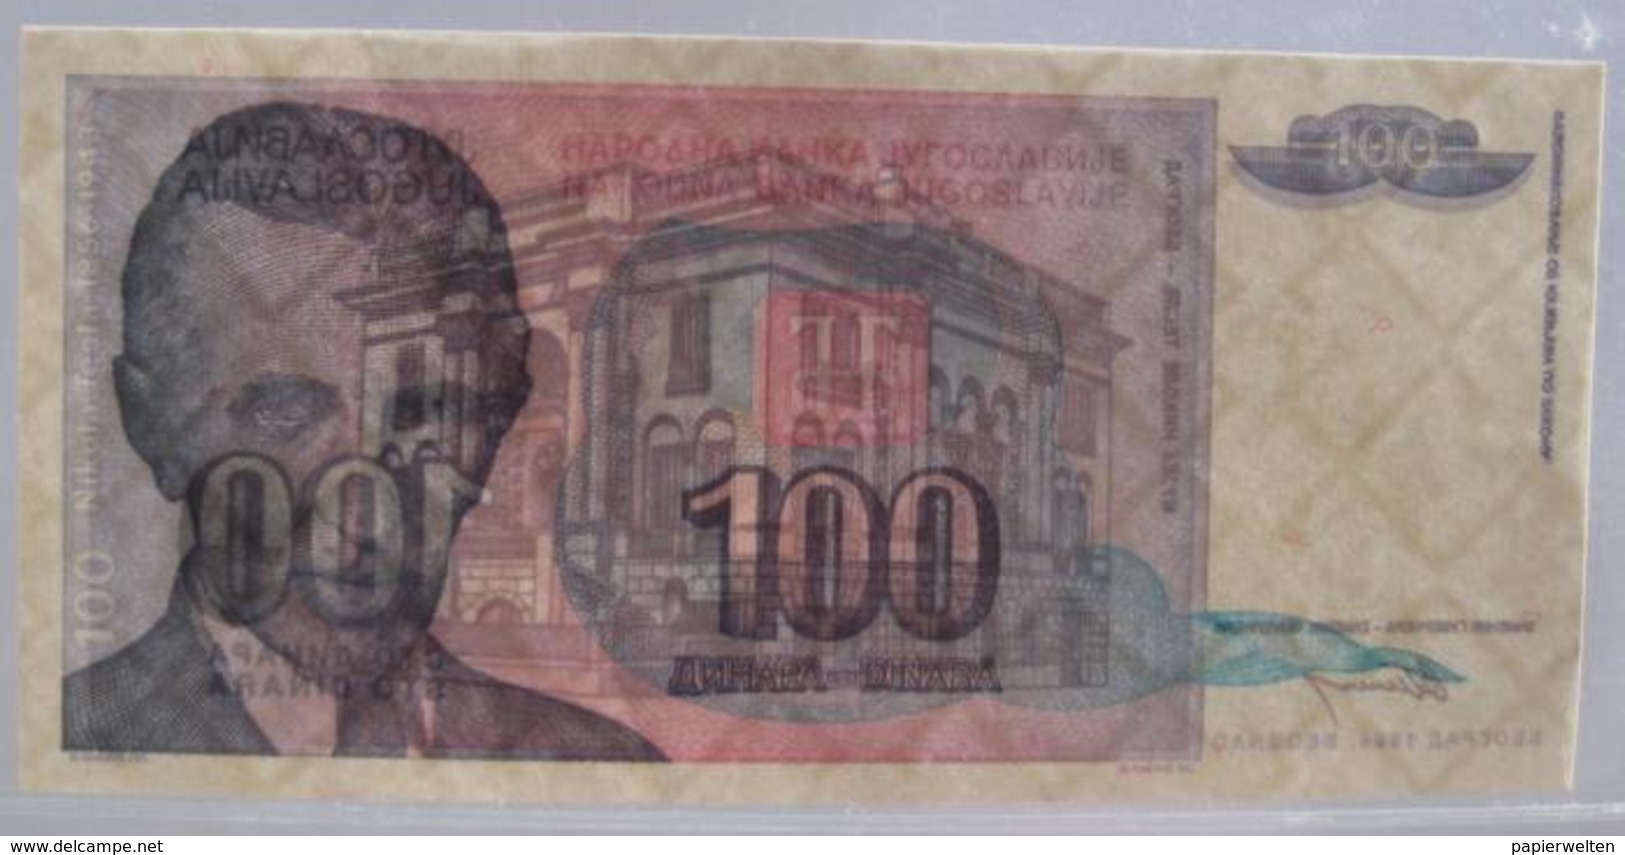 100 Dinara 1994 (WPM 139) - Jugoslawien